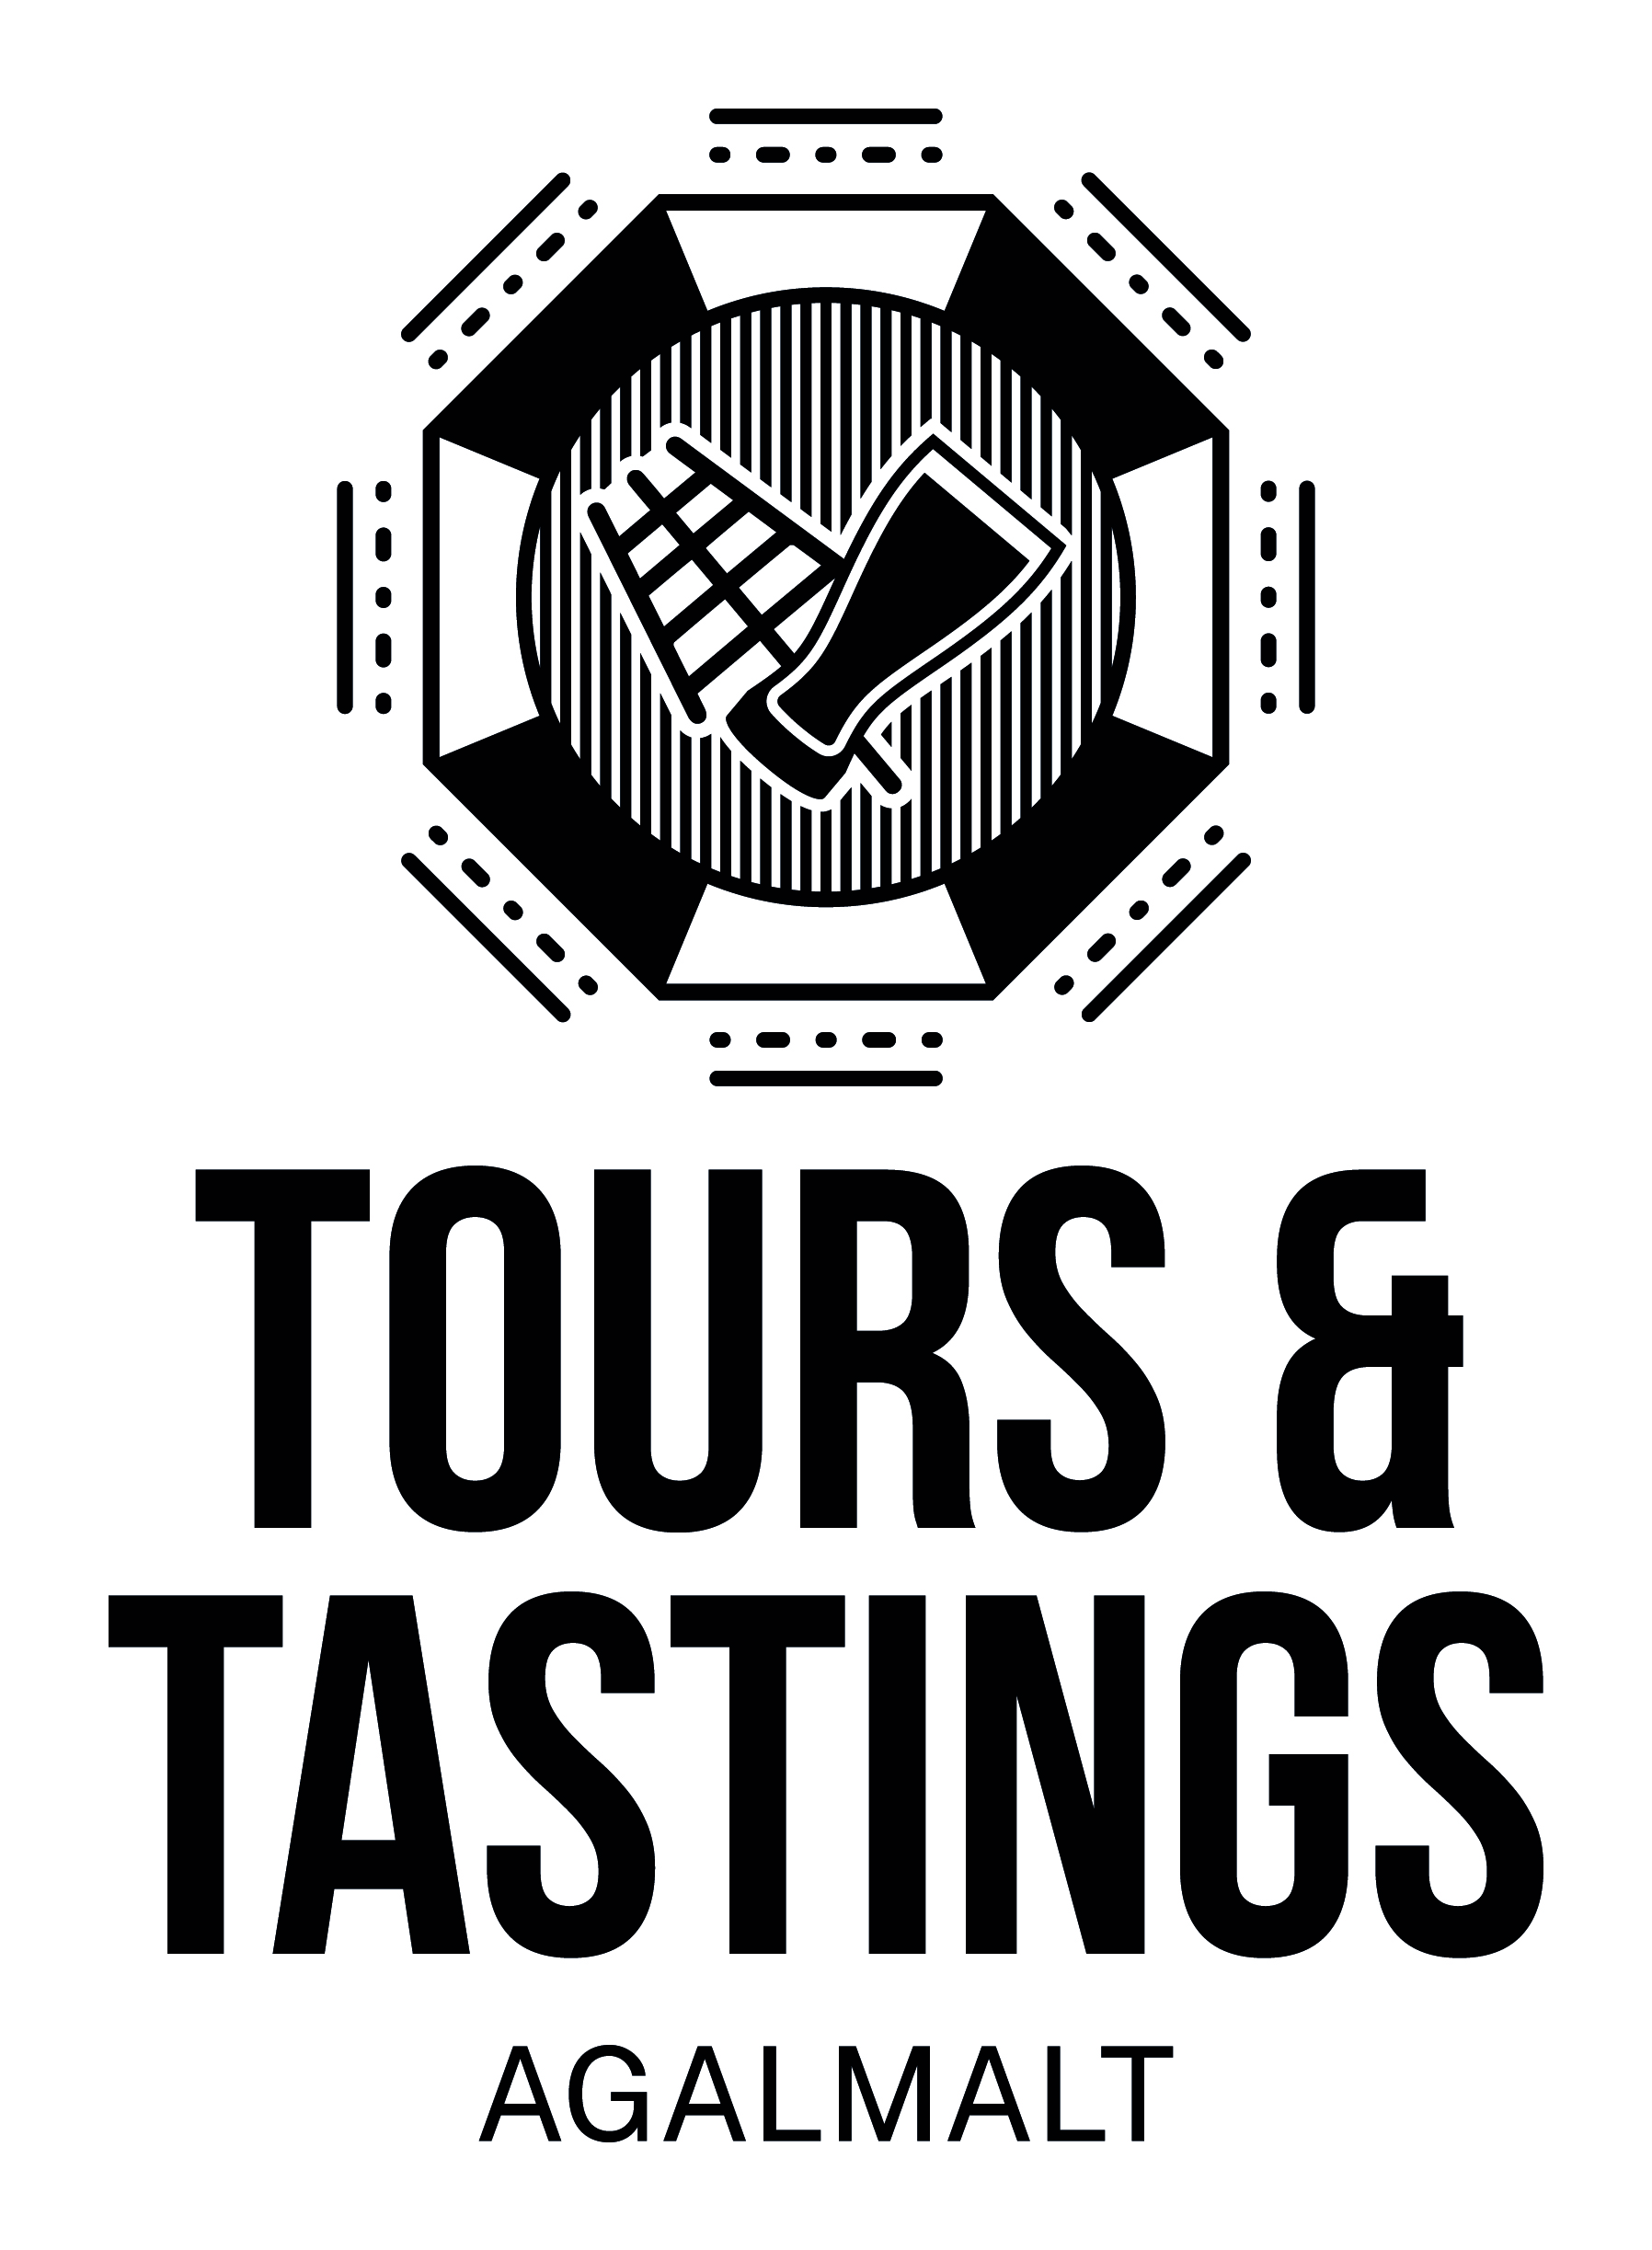 brewery tour Brussels-Agalmalt-Tour-and-tastings-beer-belgian-brewer